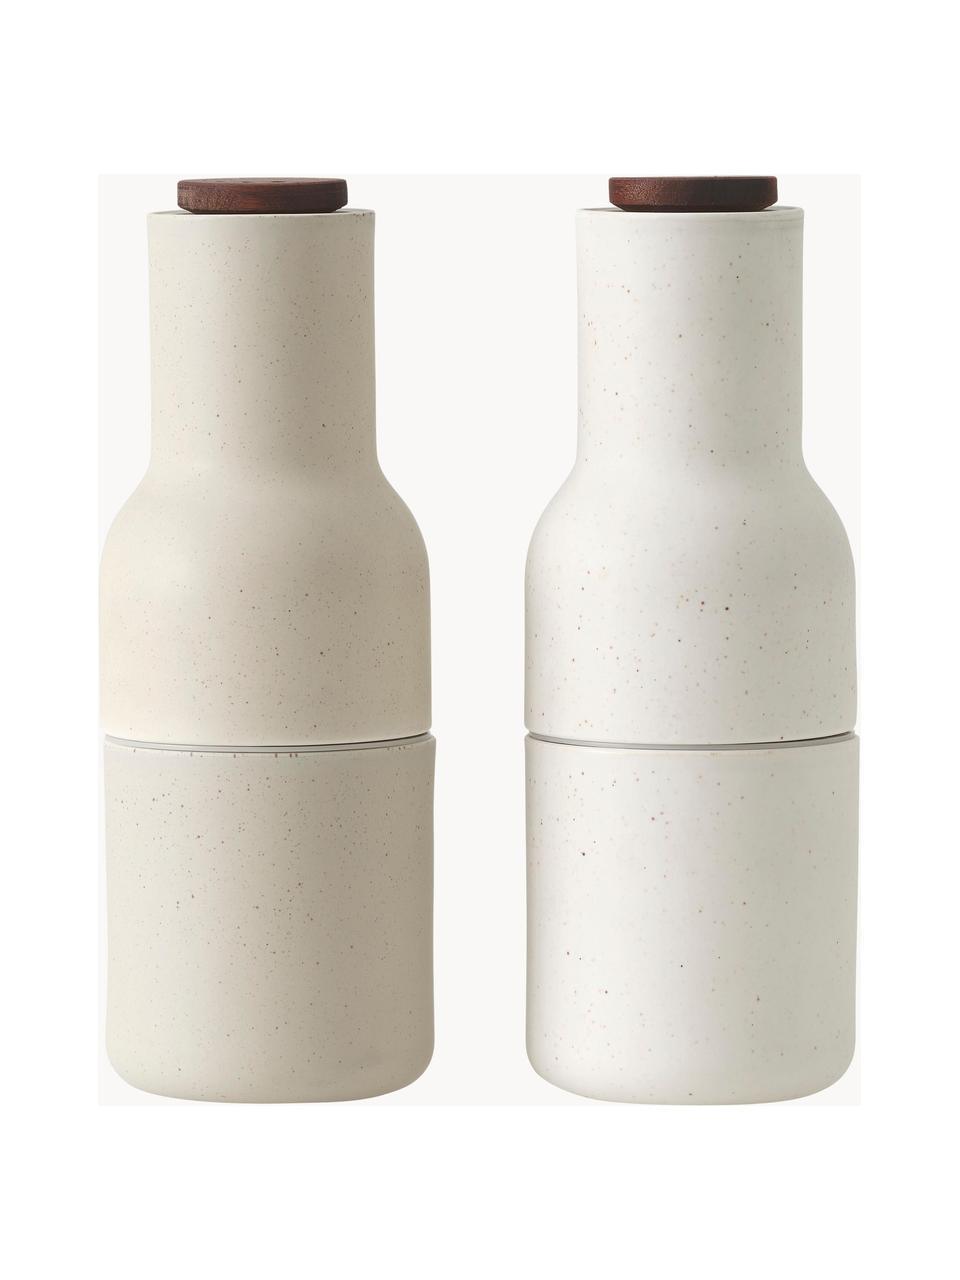 Designer zout- en pepermolen van keramiek Bottle Grinder met walnootdeksel, set van 2, Frame: keramiek, Deksel: walnootkleurig, Lichtbeige, wit, donker hout, Ø 8 x H 21 cm